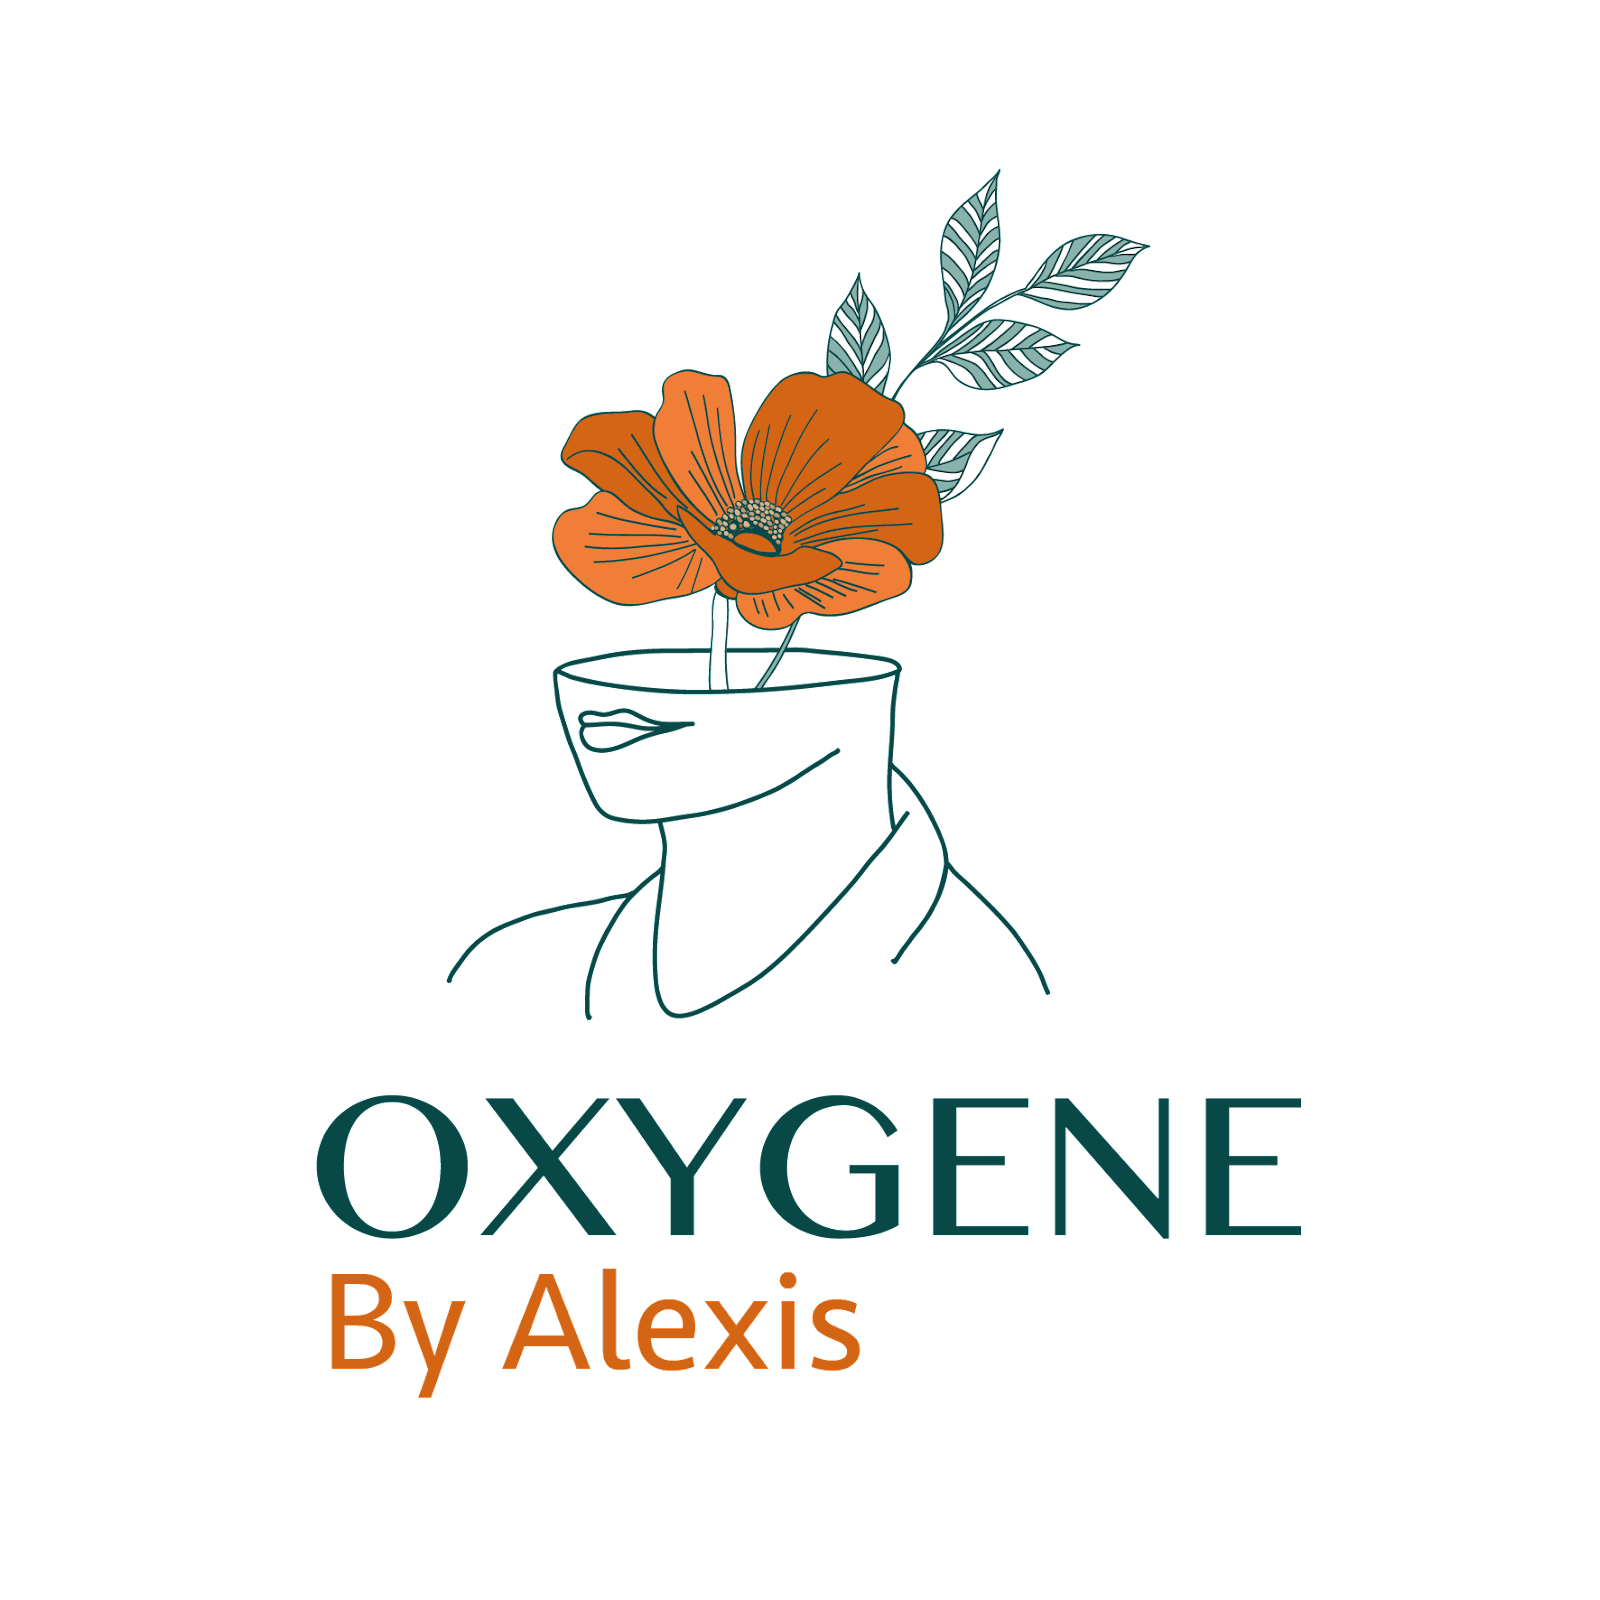 (Français) Oxygène By Alexis